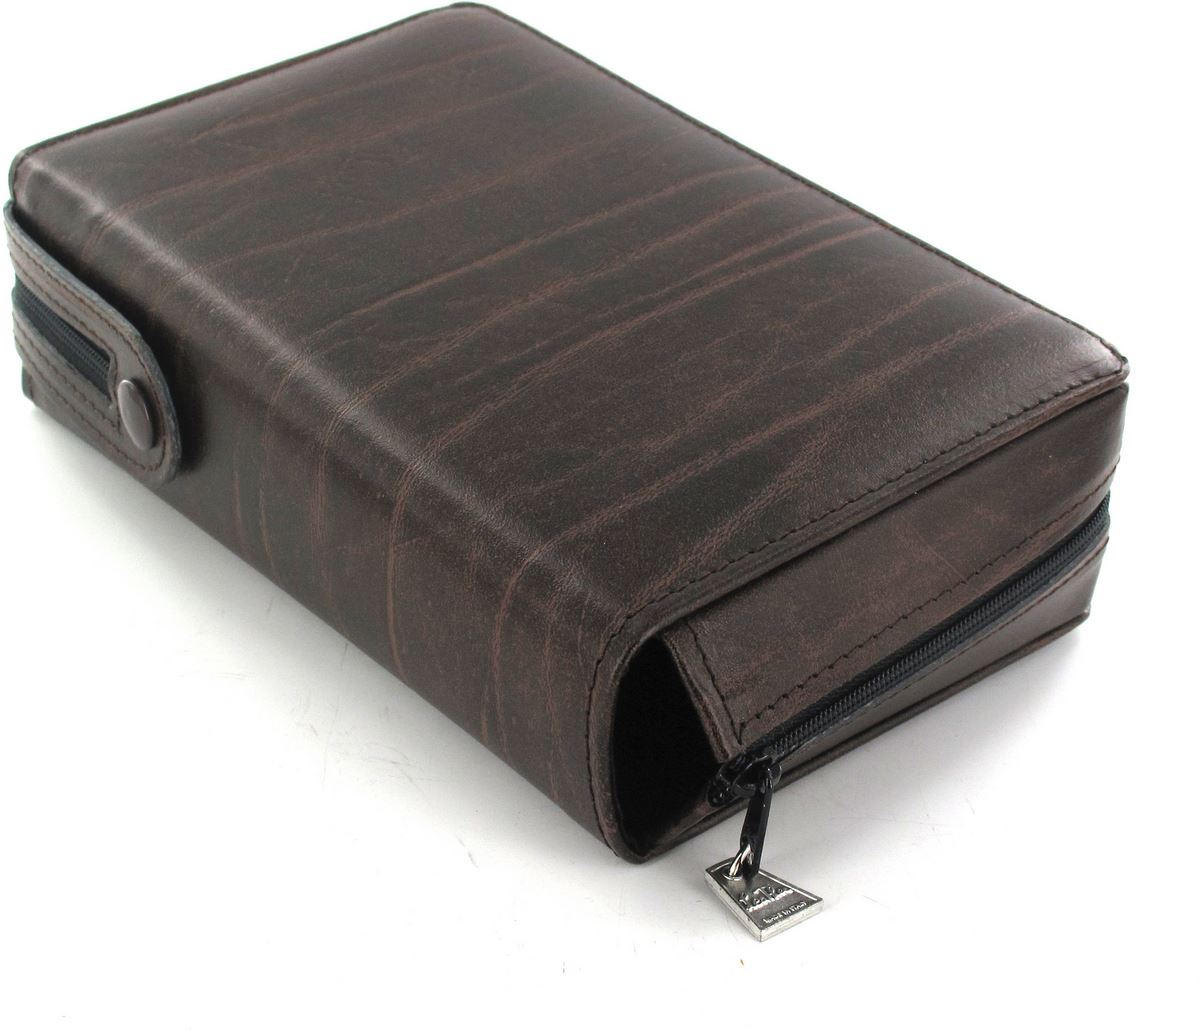 custodia per bibbia gerusalemme edizione 2009, marrone, dimensione interna massima: 19,5 x 13 x 6 cm